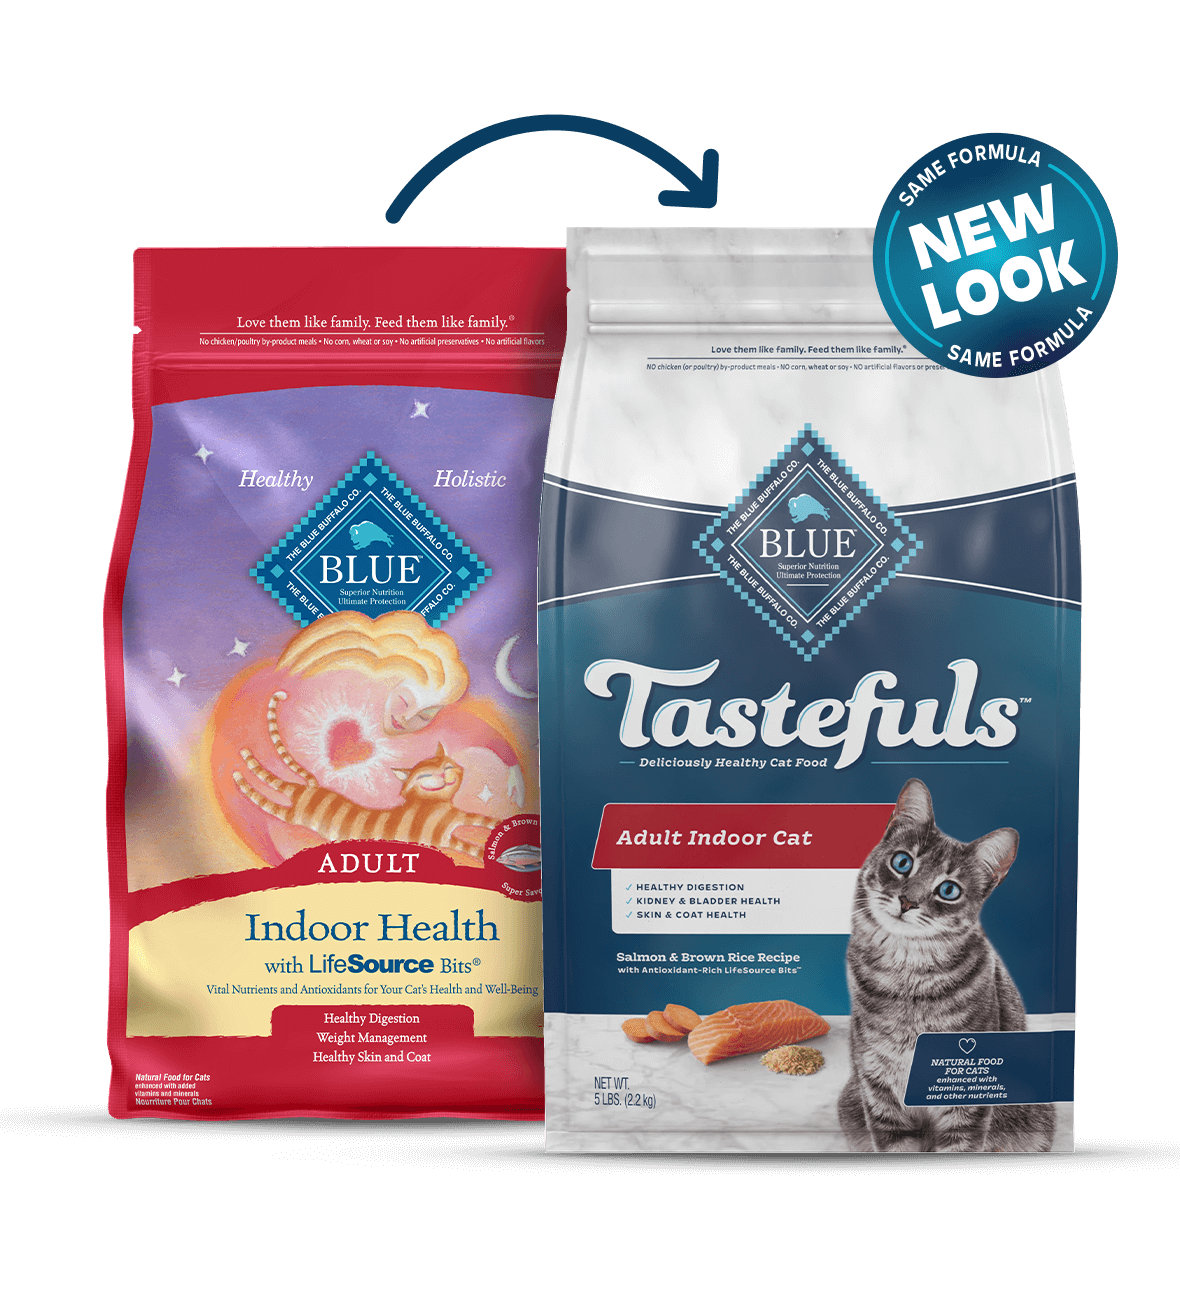 blue tastefuls adult indoor salmon & brown rice recipe cat dry food